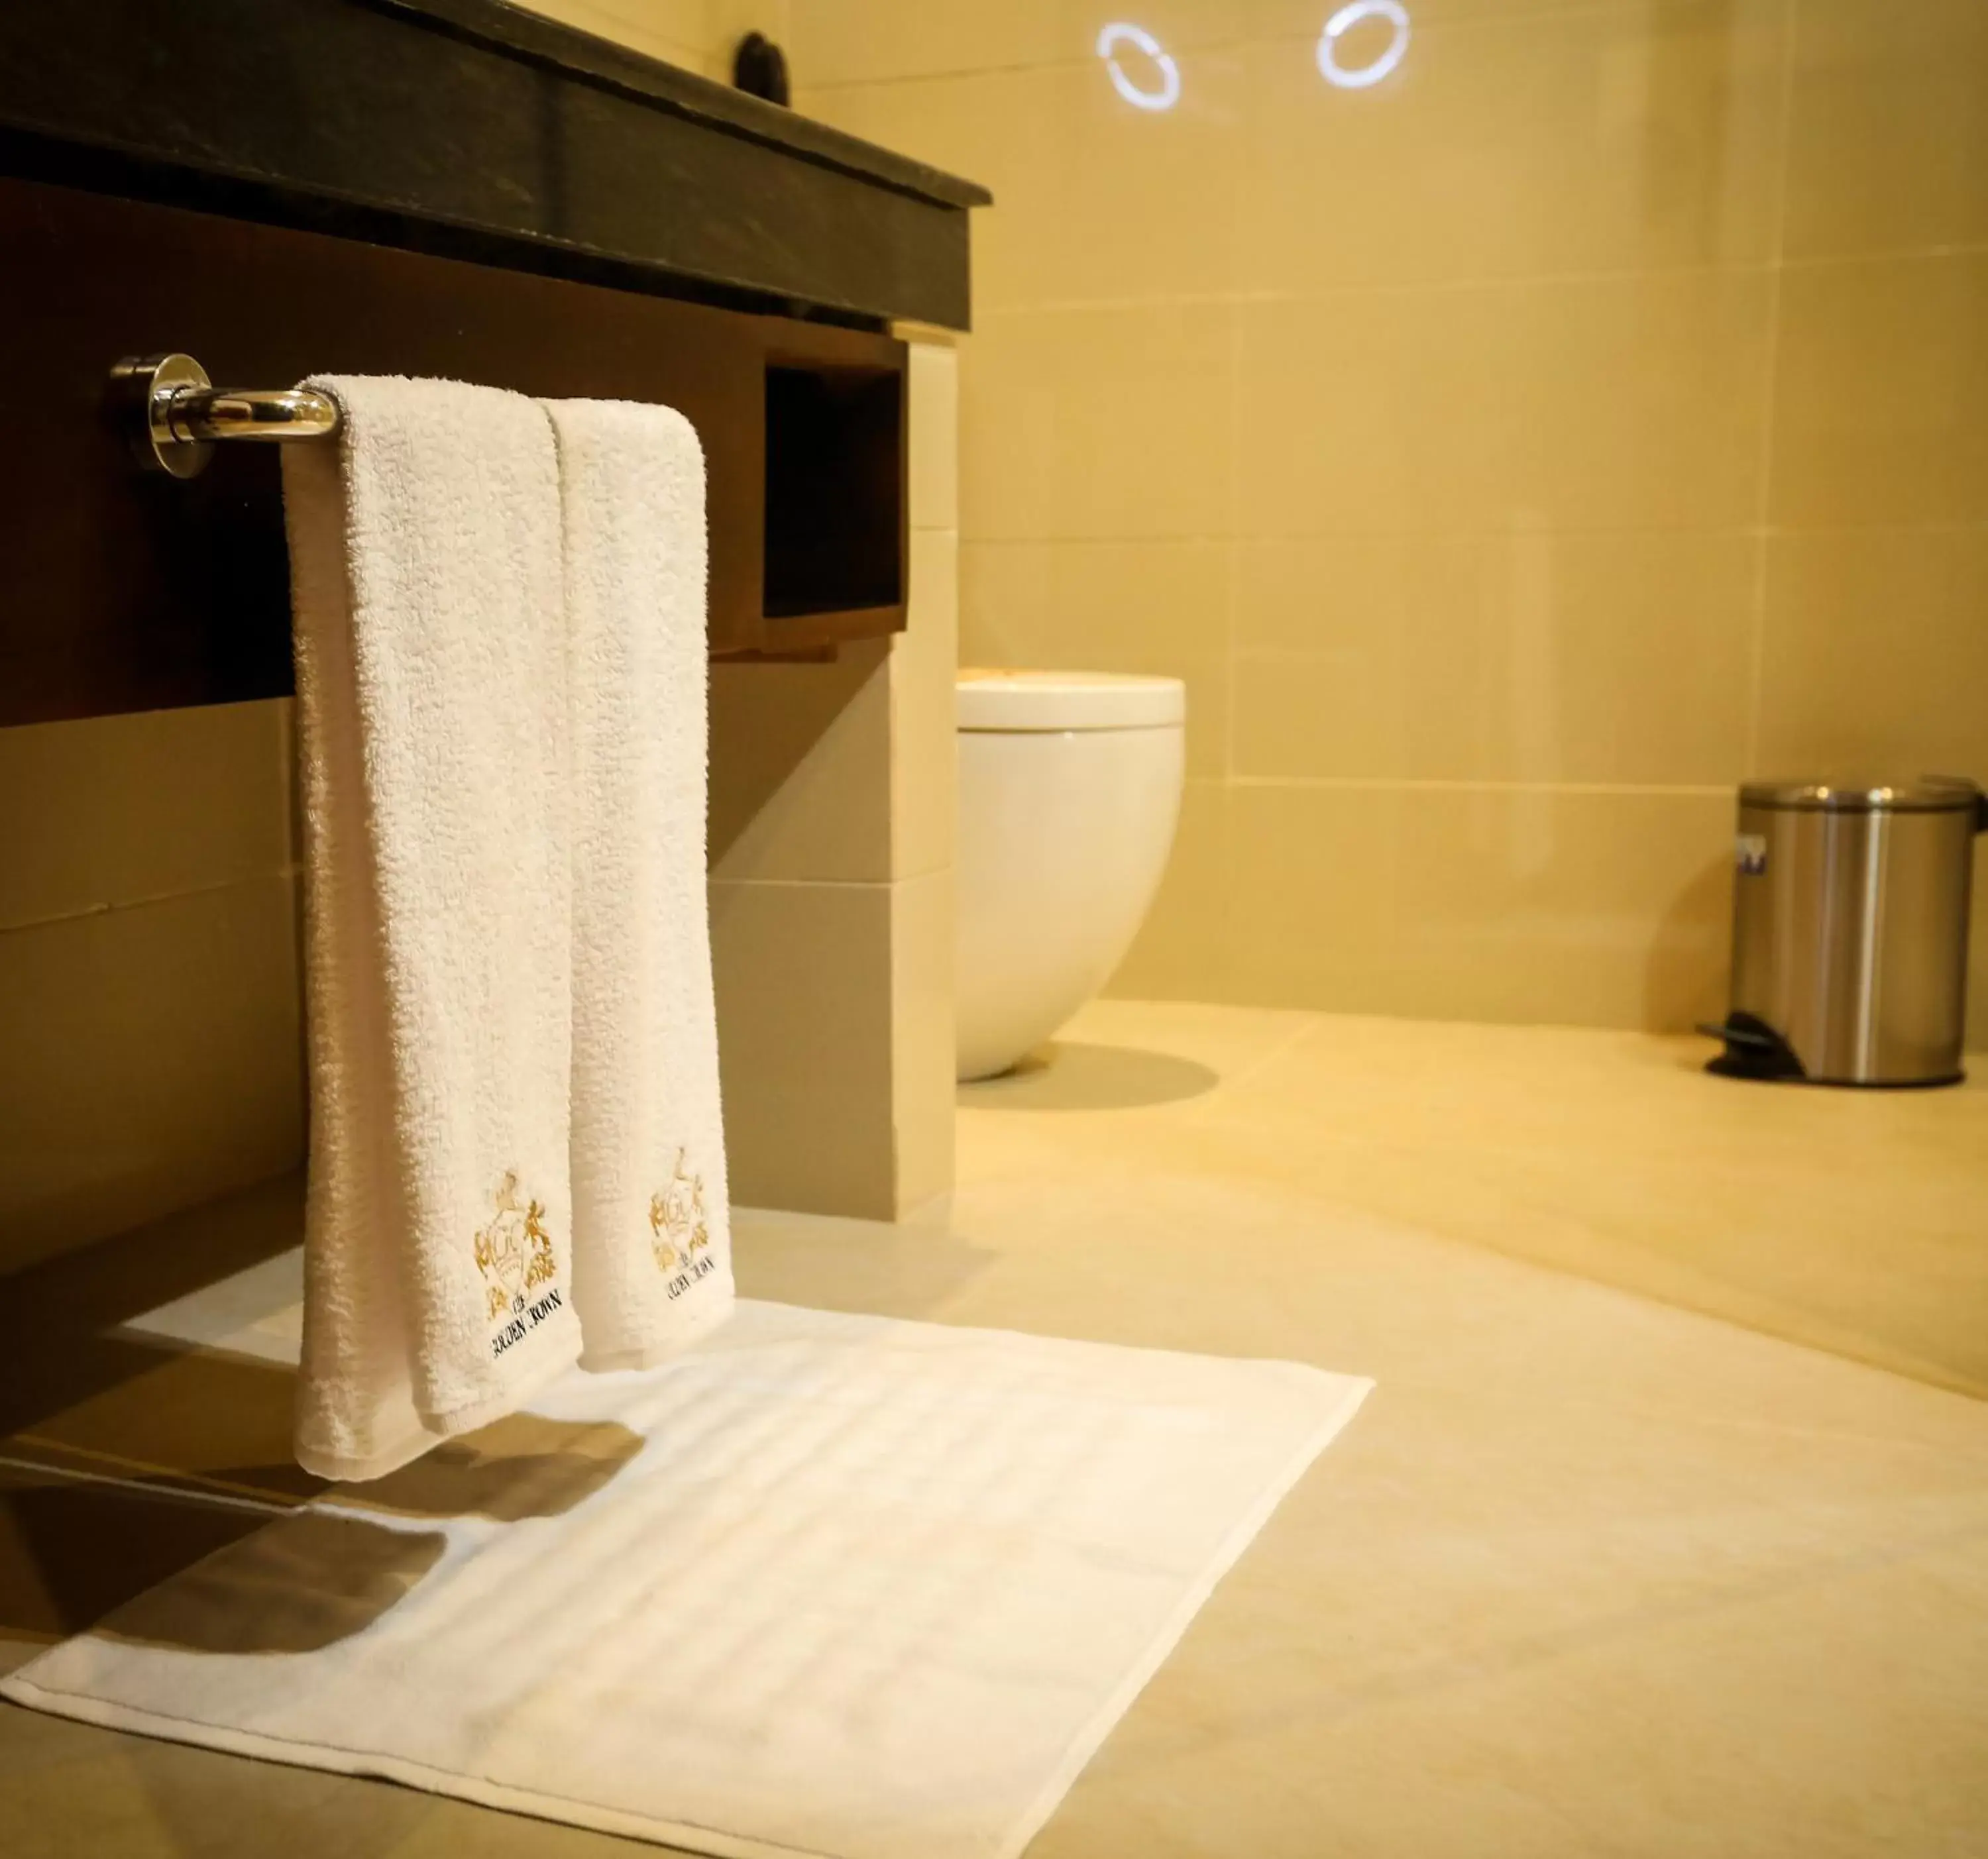 Toilet in The Golden Crown Hotel